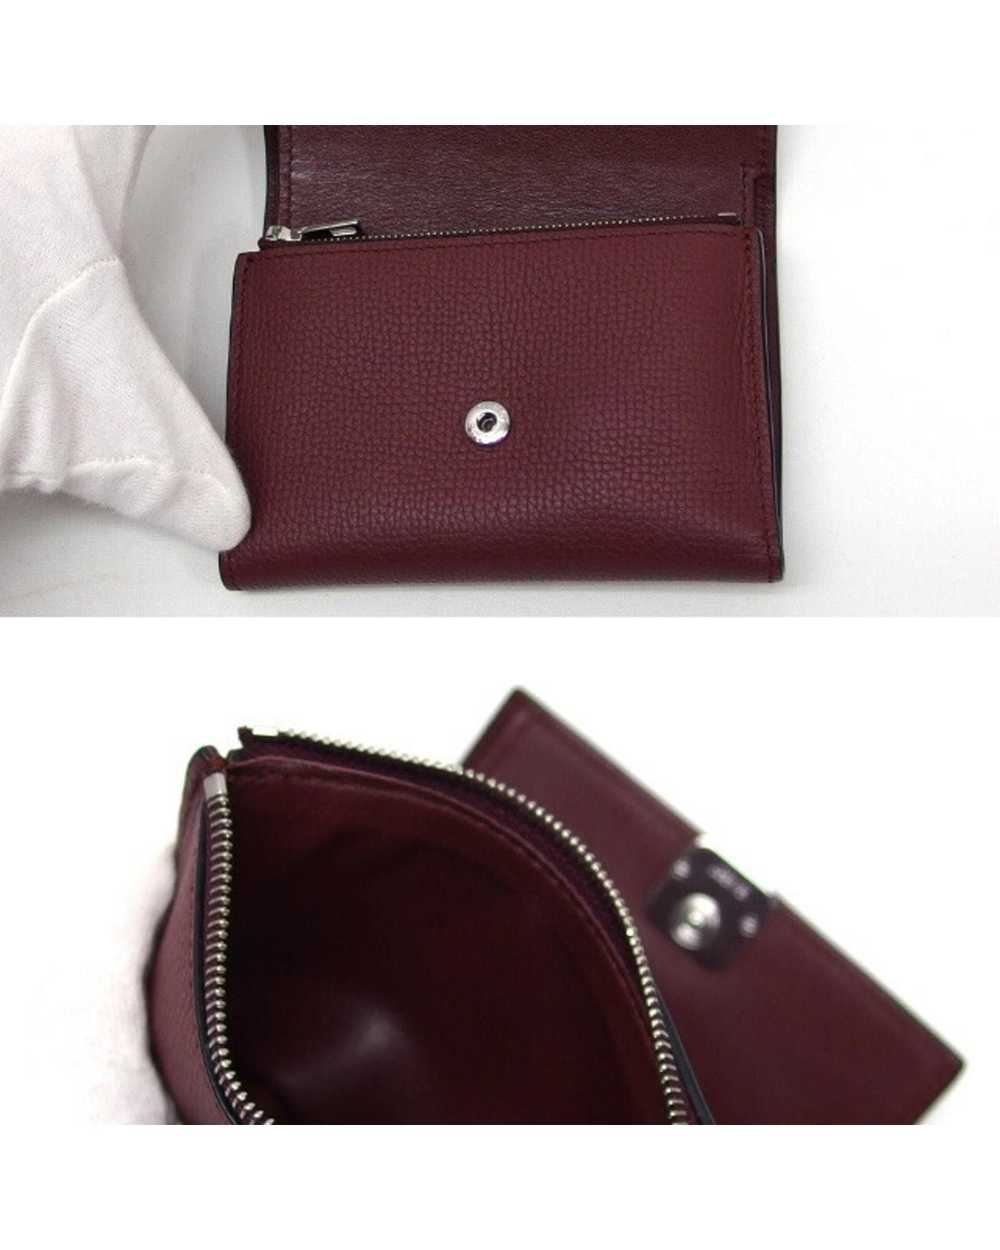 Loewe Leather Tri-Fold Wallet with Loewe Logo - image 5